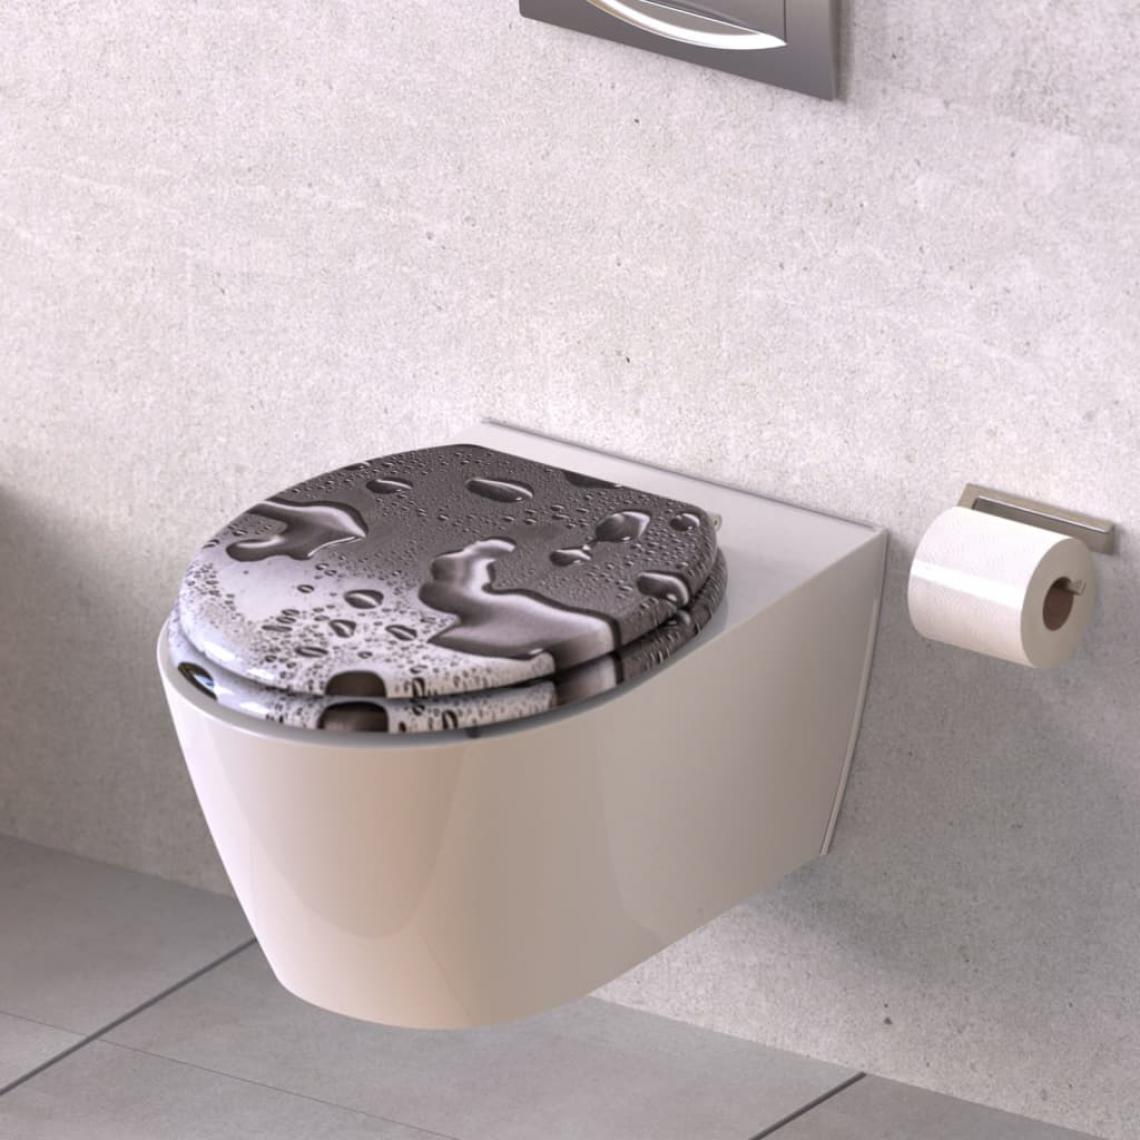 Schutte - SCHÜTTE Siège de toilette avec fermeture en douceur GREY STEEL - Abattant WC